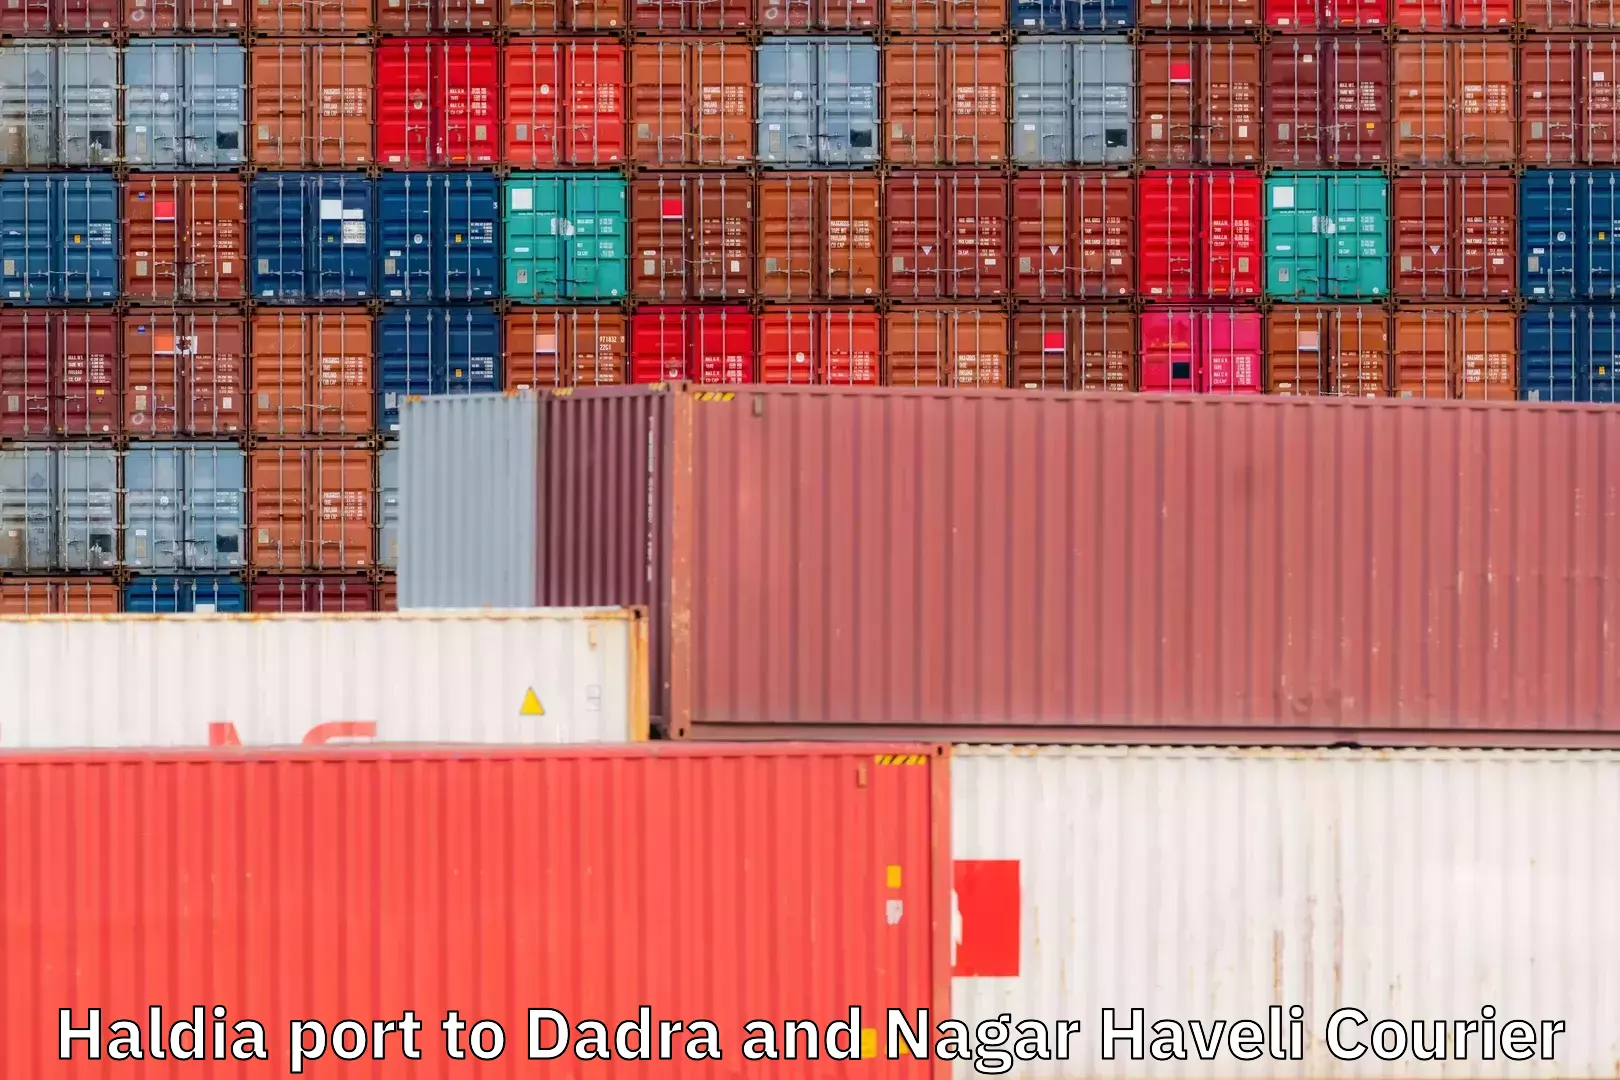 On-demand shipping options Haldia port to Dadra and Nagar Haveli